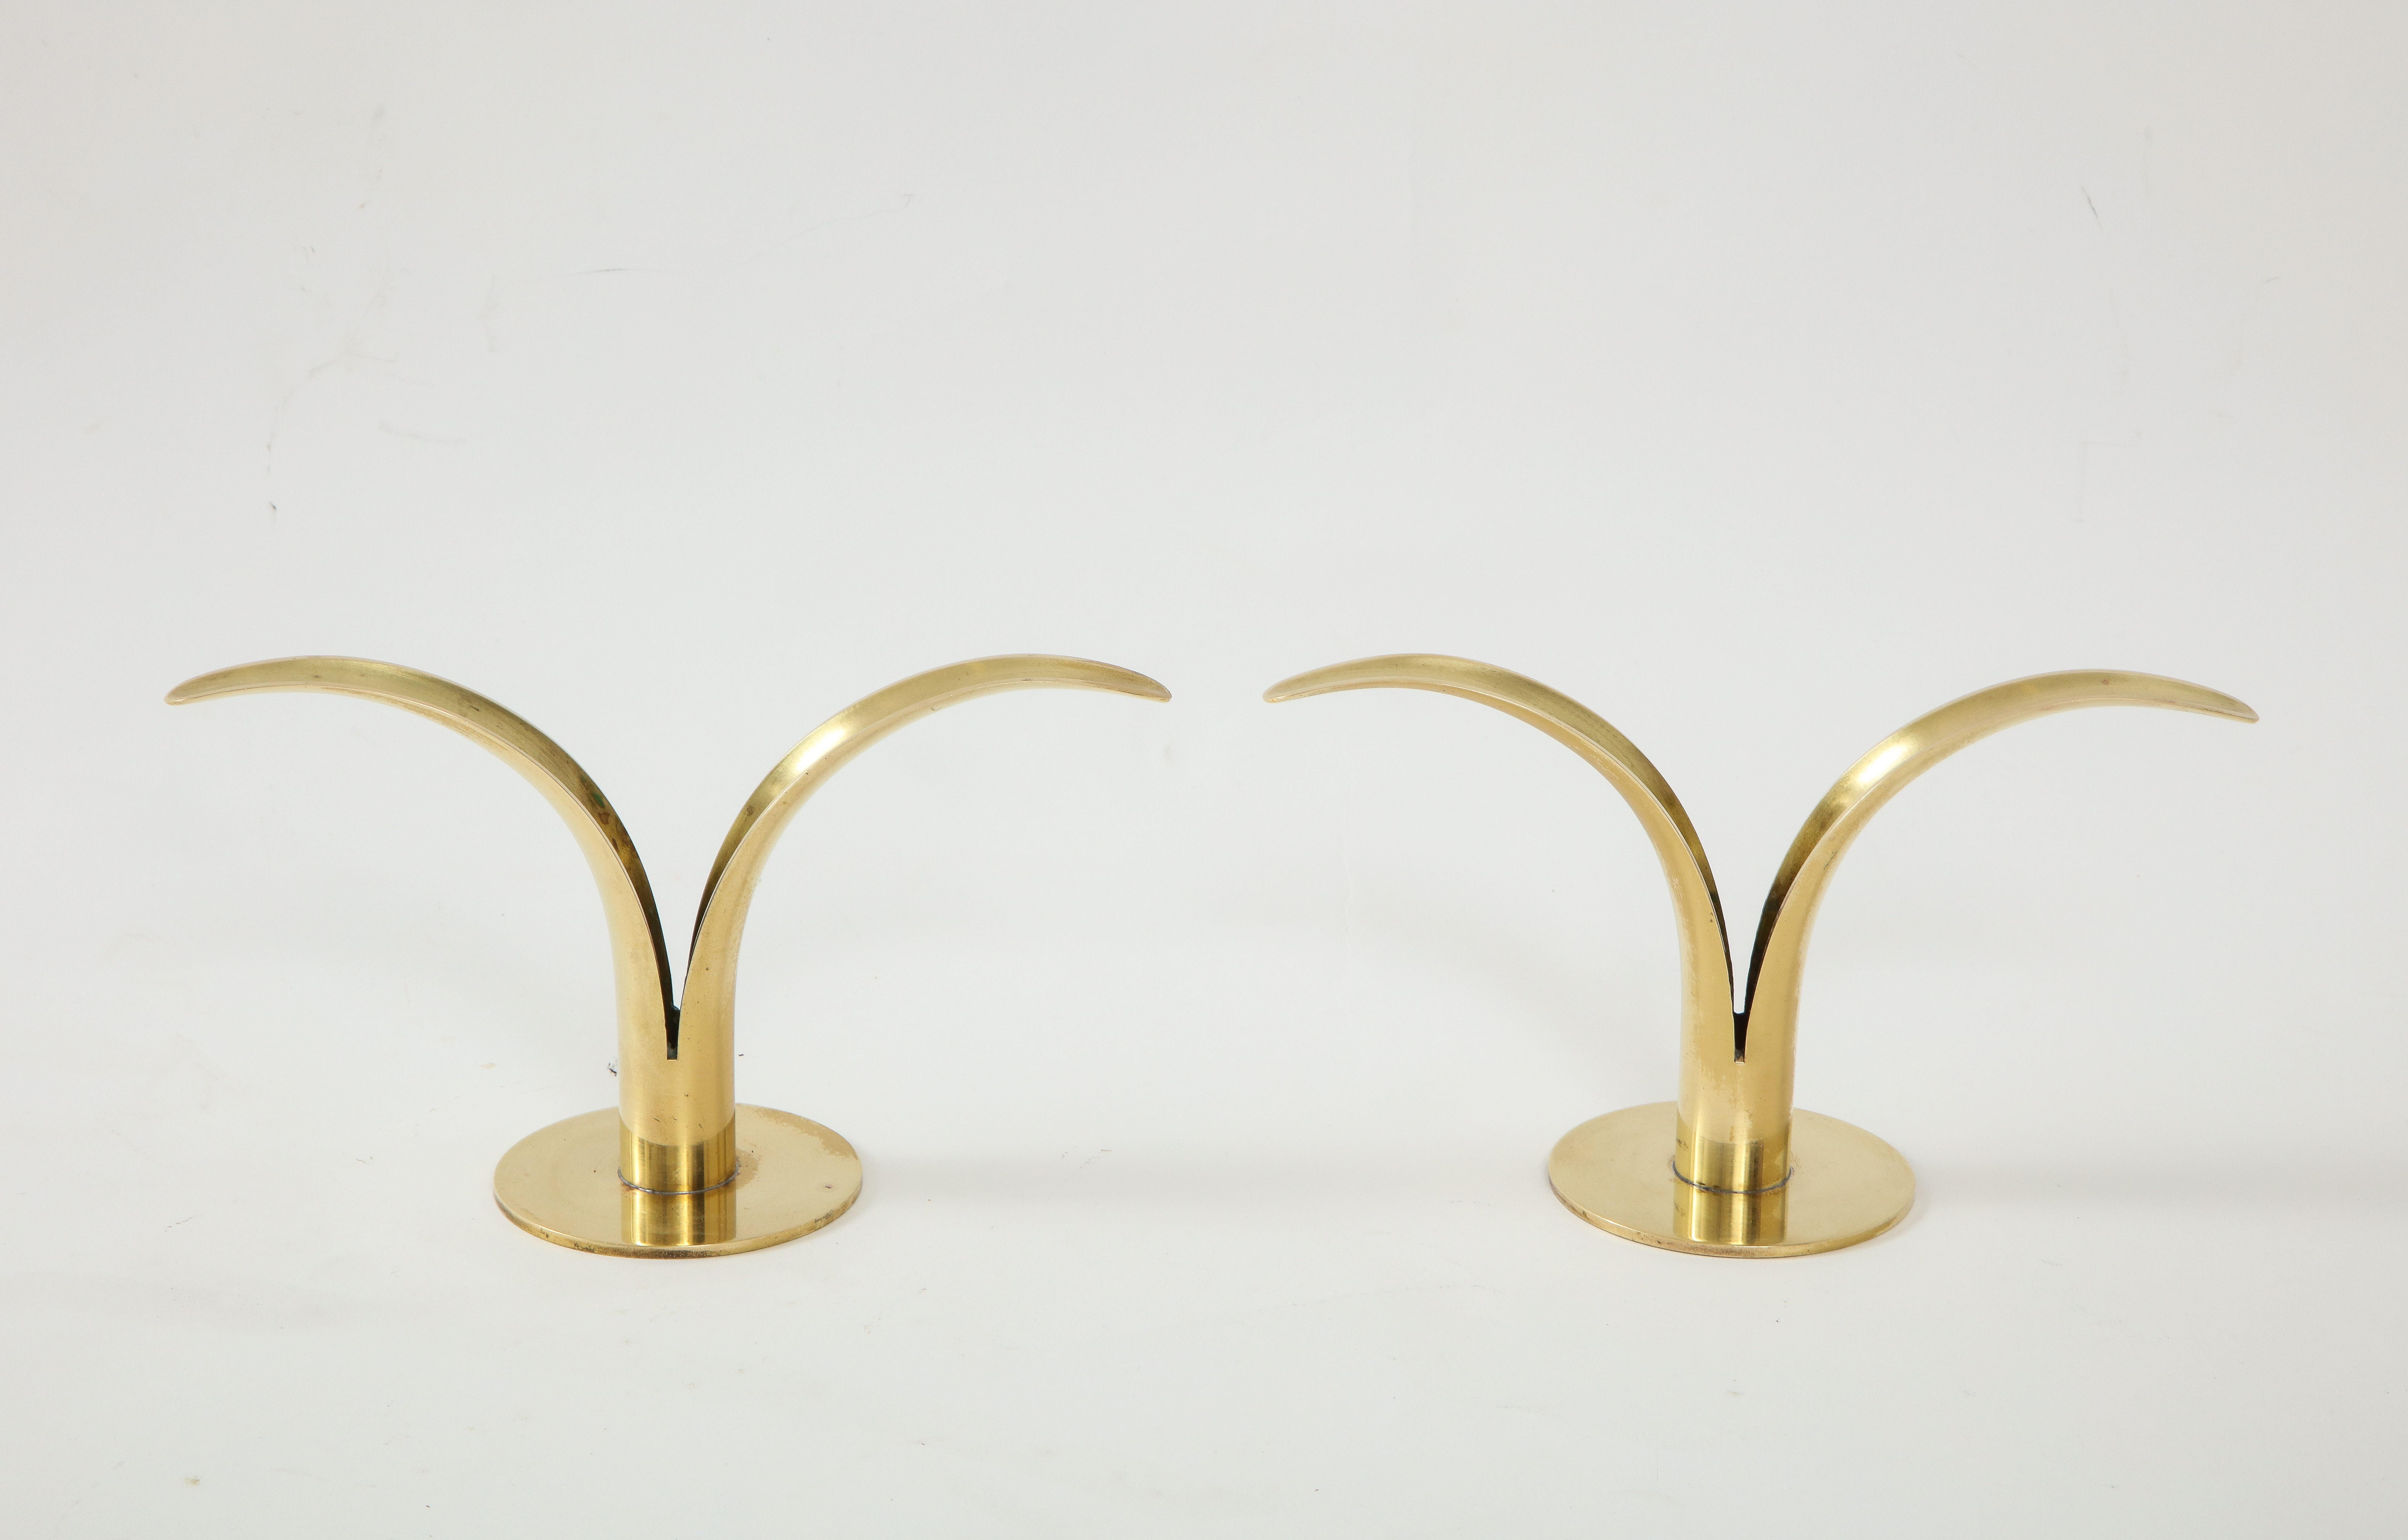 Pair of Swedish modern brass candlesticks designed by Ivar Ahlenius Bjork for Ystad. Stamped.